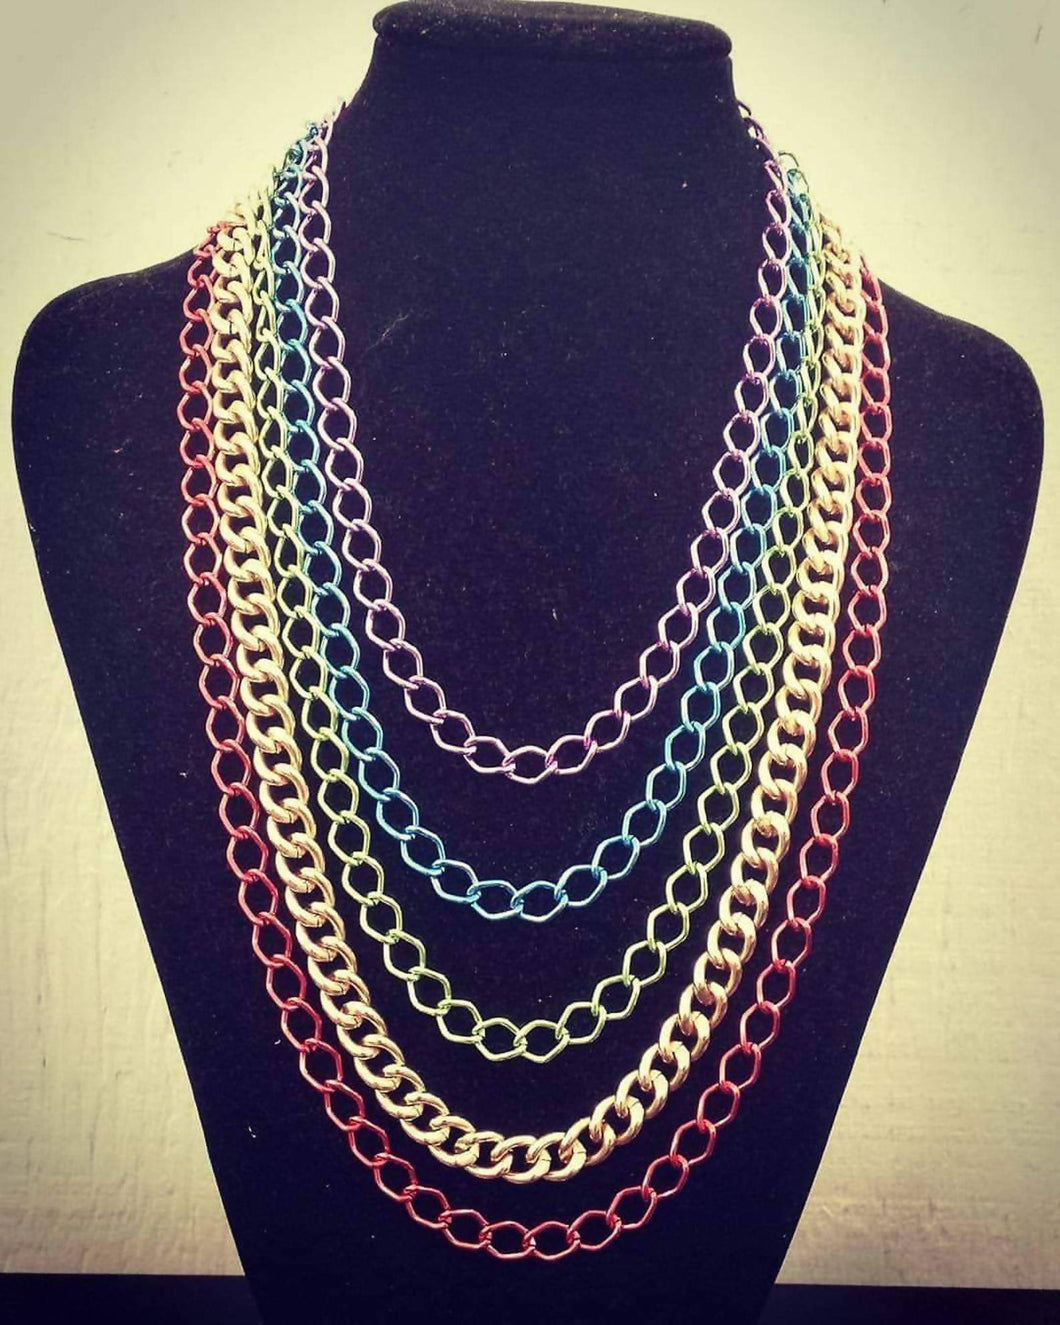 PRIDE rainbow chain necklace